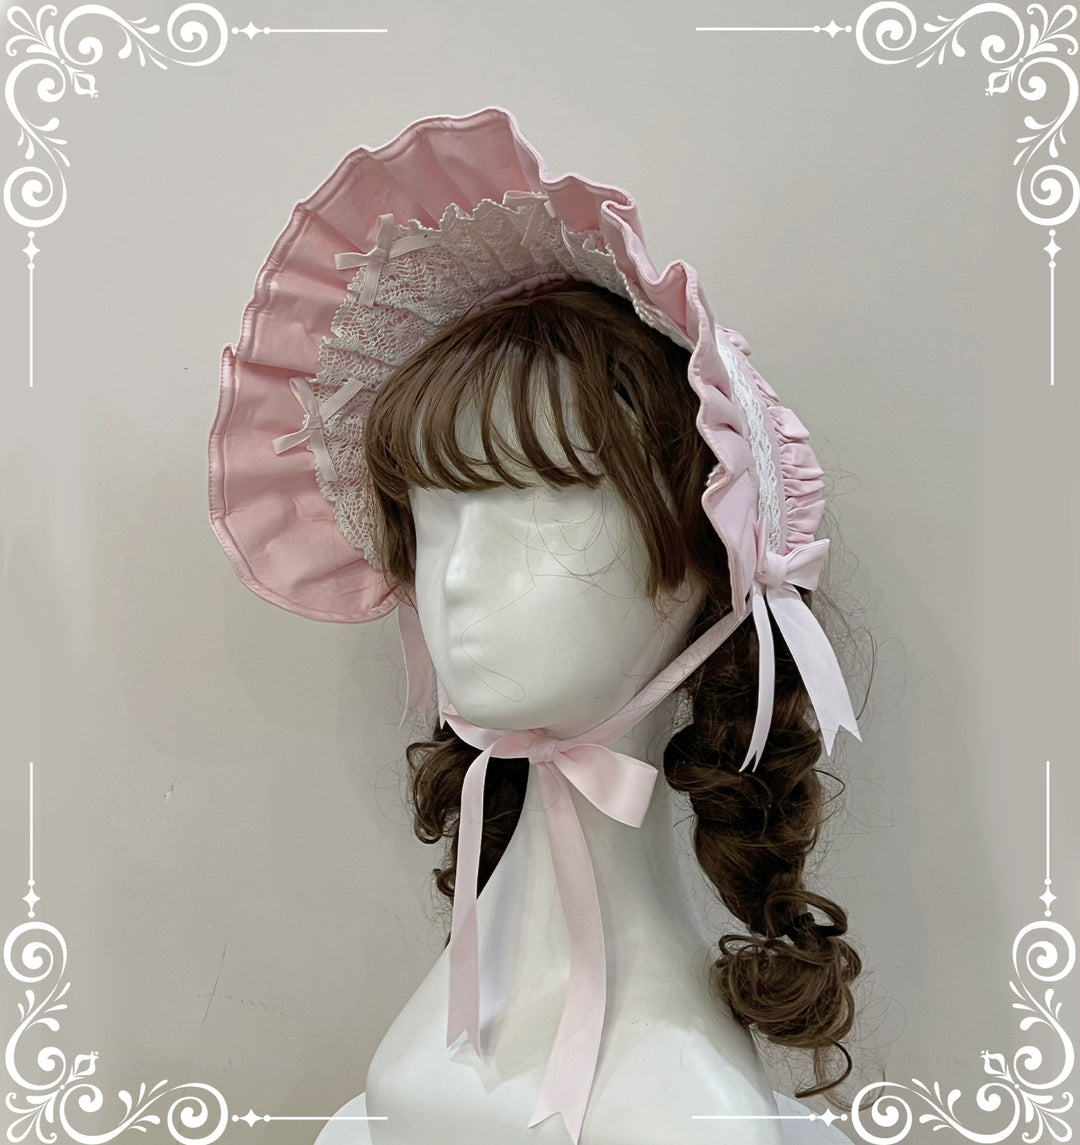 (BFM)Little Bear~Laura's Doll~Sweet Lolita Bloomer Bonnet Headband Hair Clip   